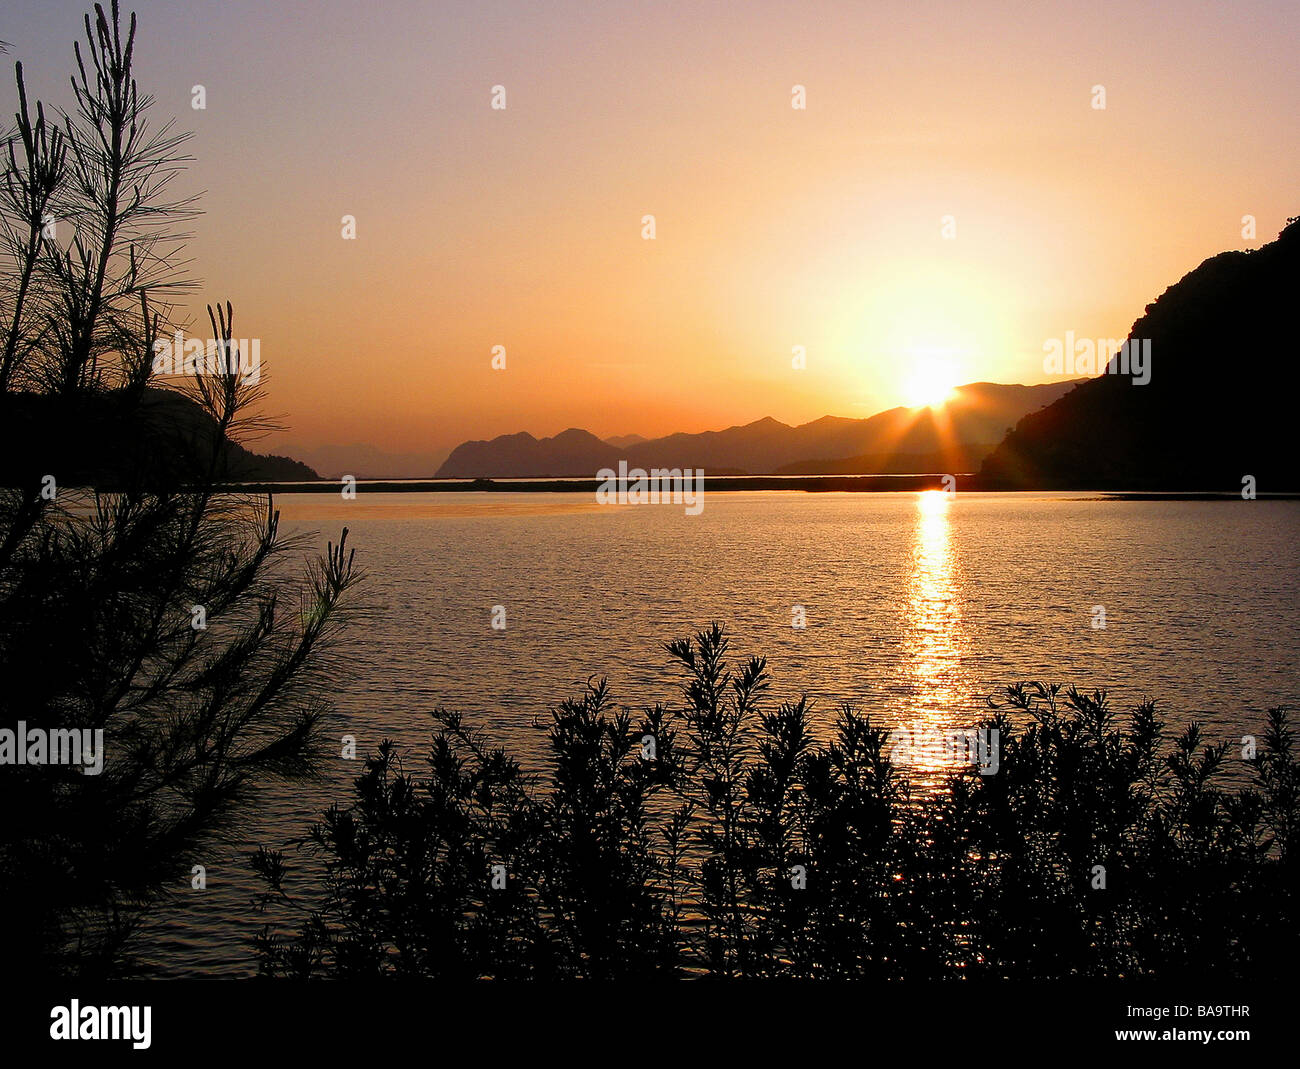 Sunset at the Iztuzu Lake, Dalyan Turkey Stock Photo